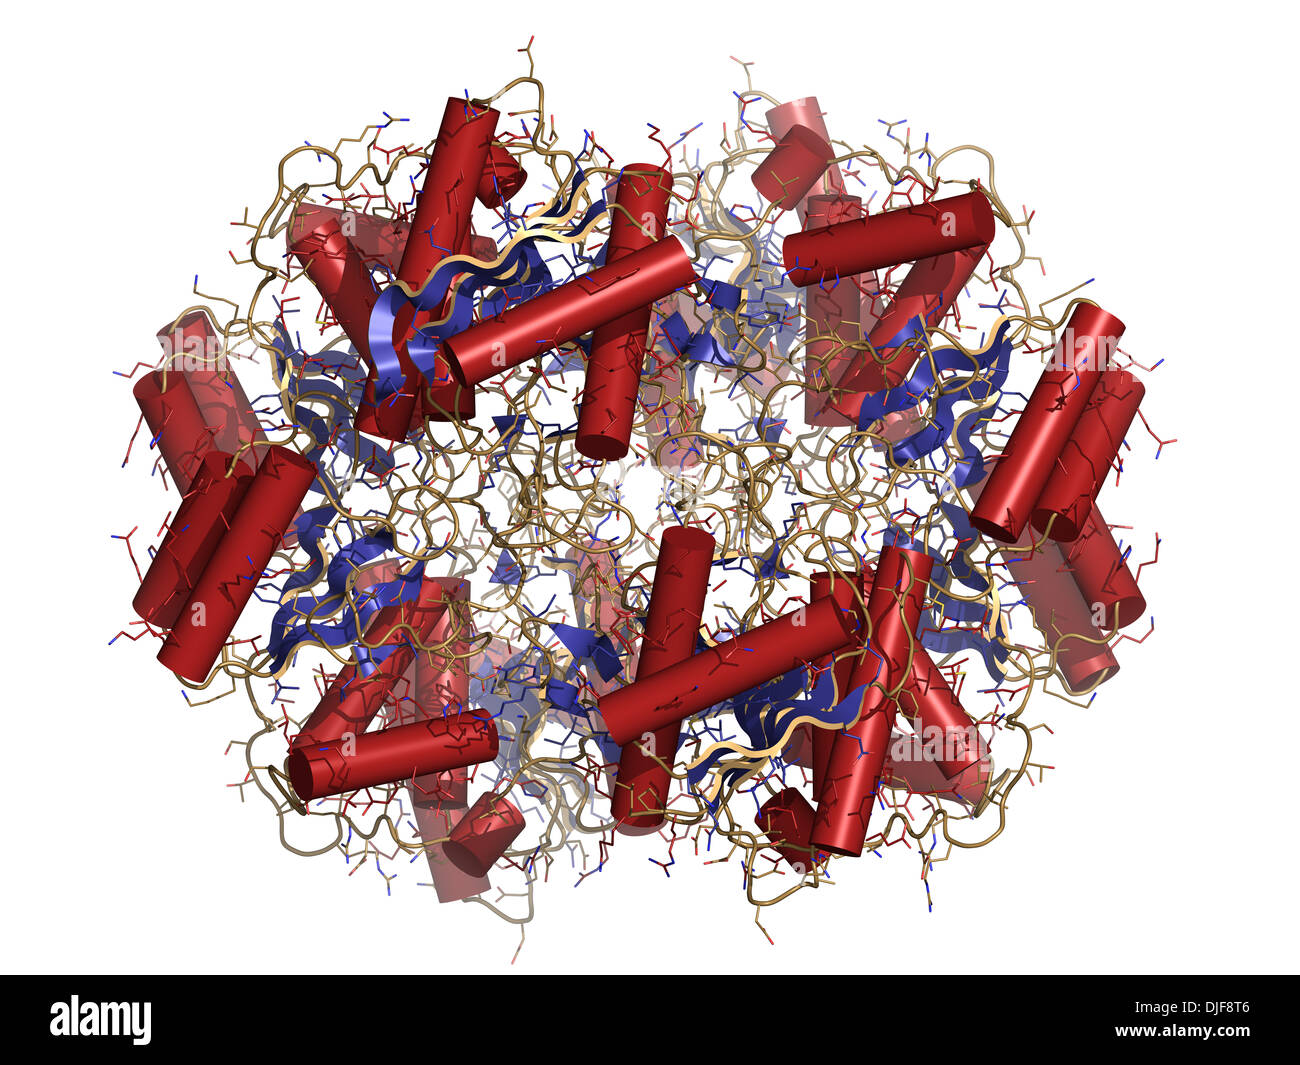 Asparaginase enzyme molecule. Used in leukemia treatment (crisantaspase). Stock Photo